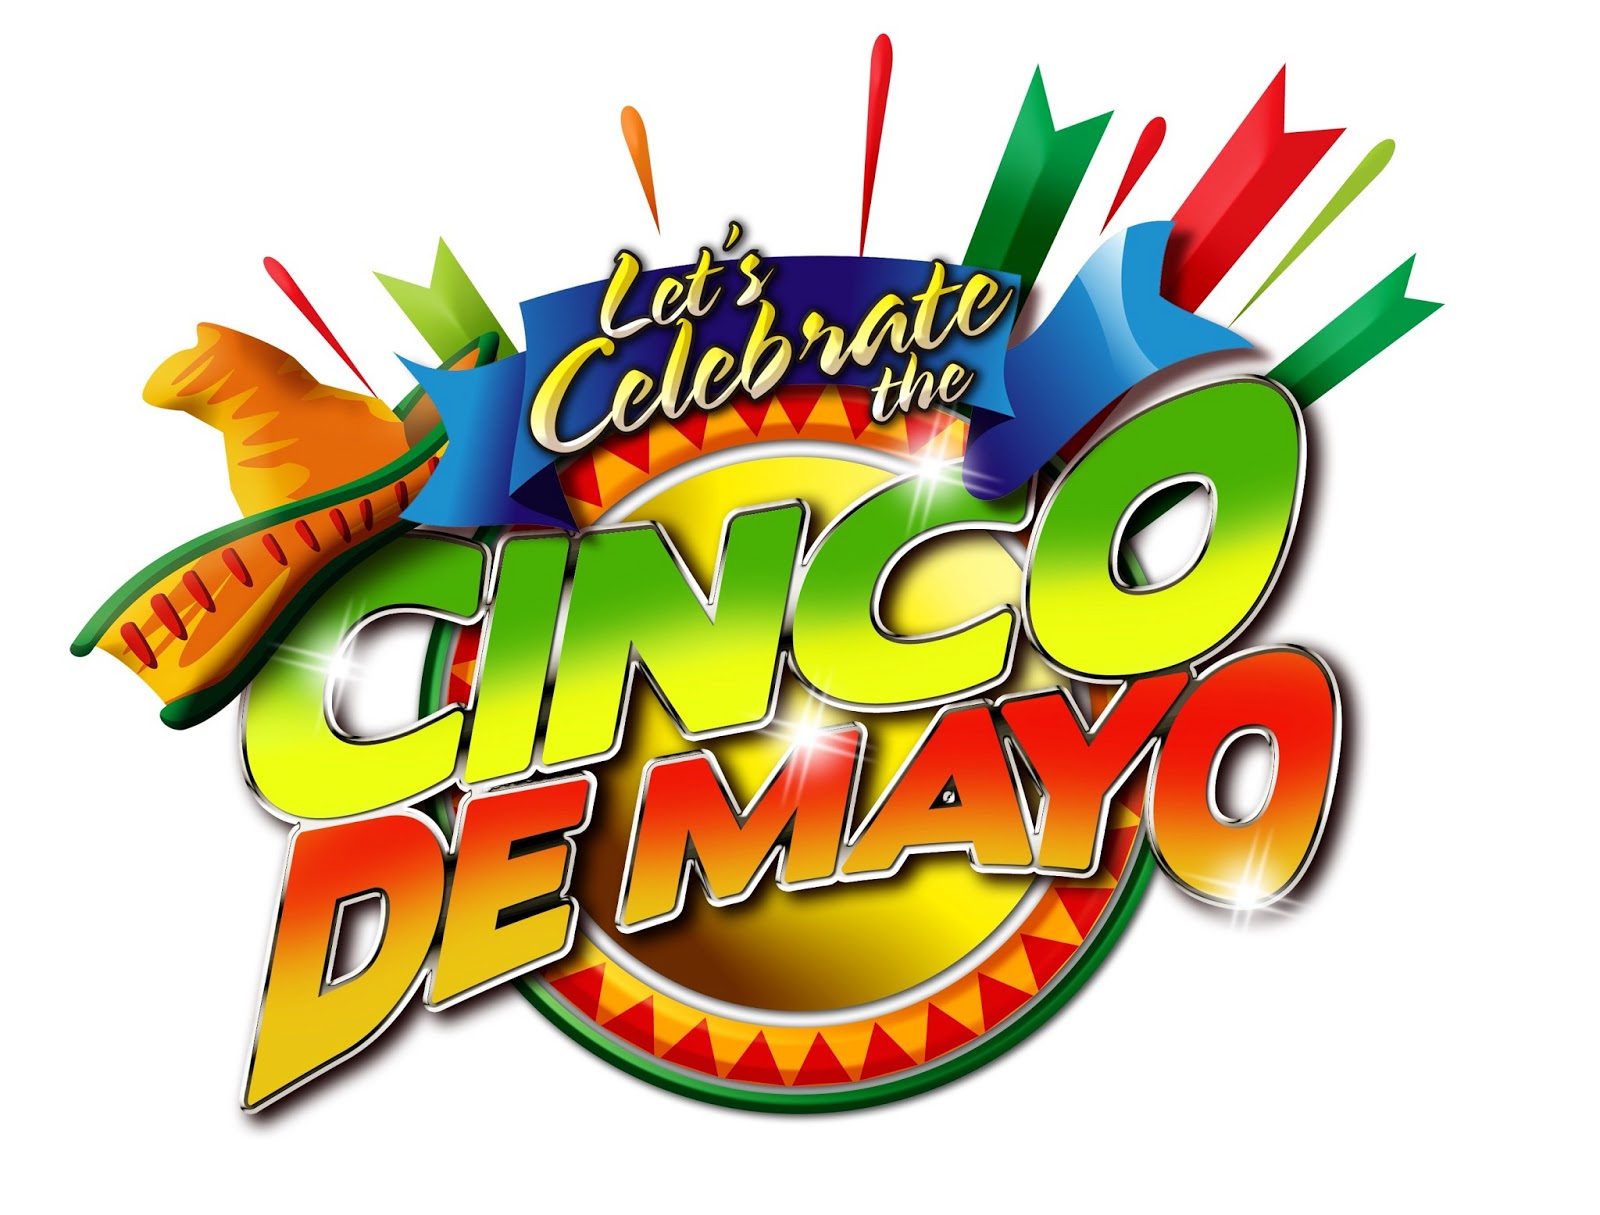 Enjoy cinco de mayo with celebration of mexican heritage and pride